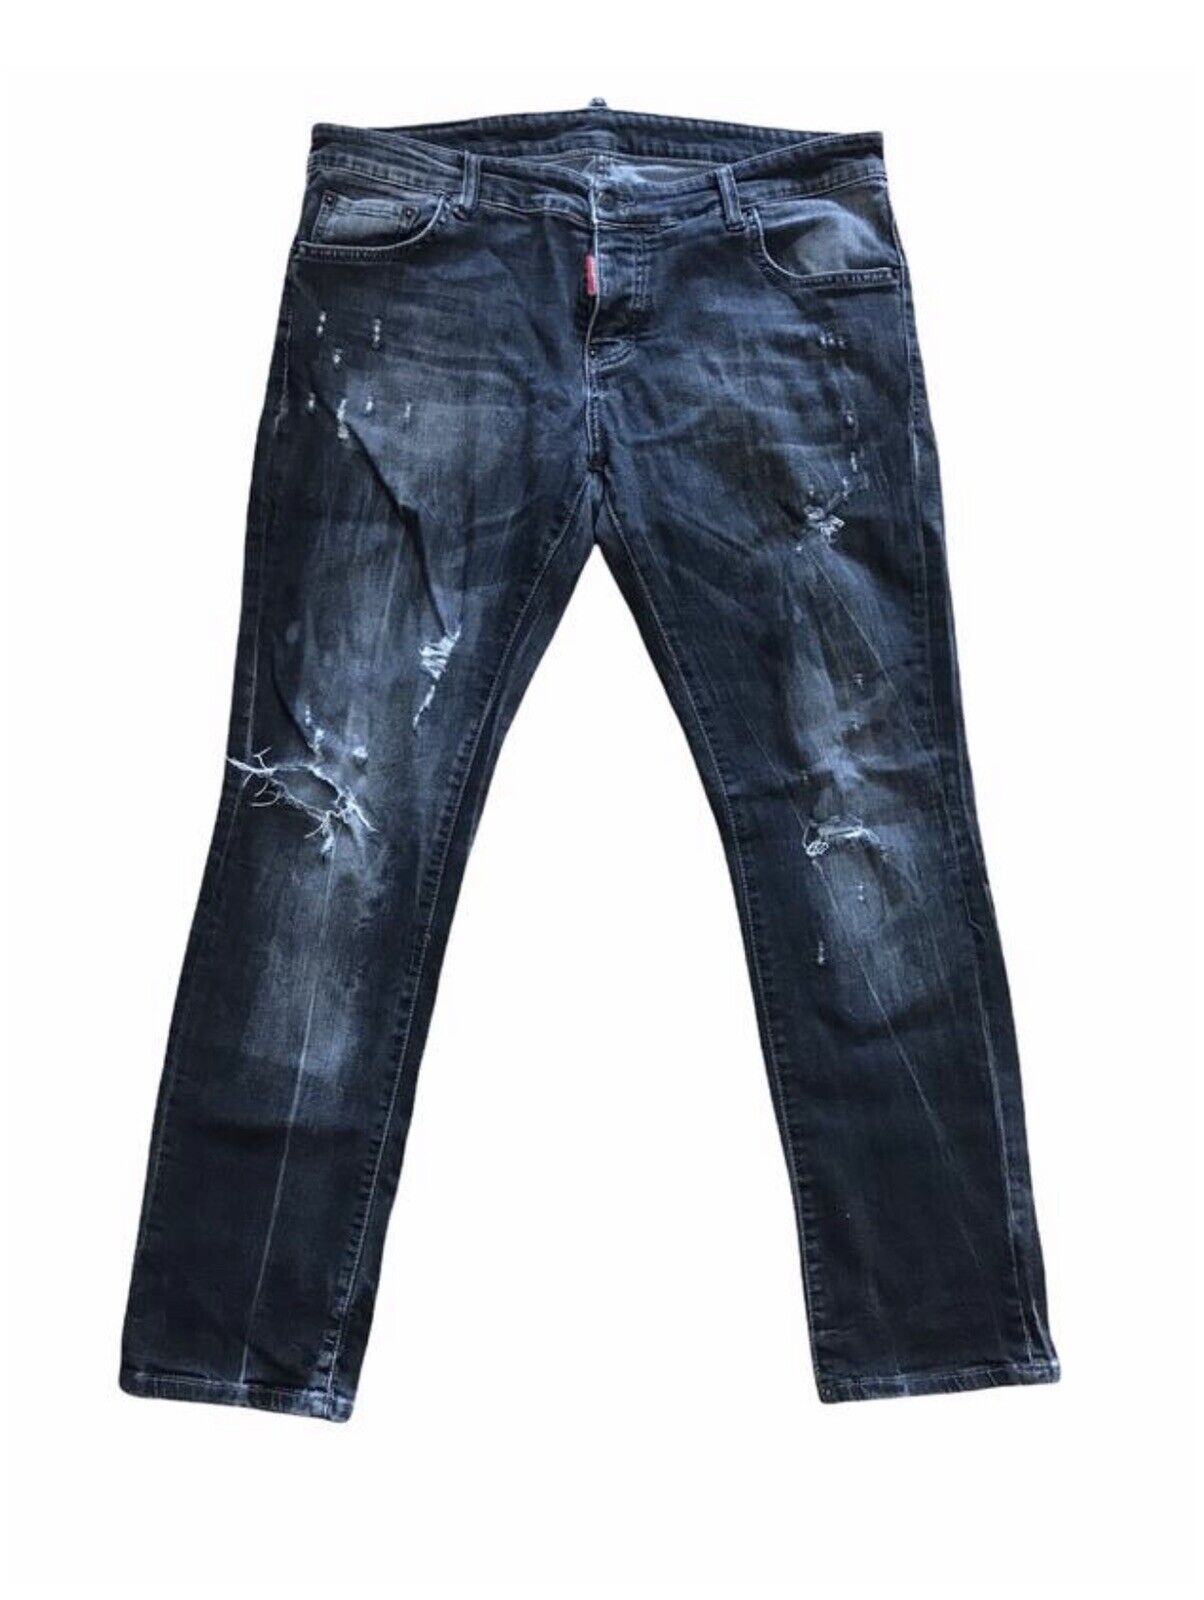 Grit Perforeren Gevoel van schuld dsquared jeans black size 36 | eBay